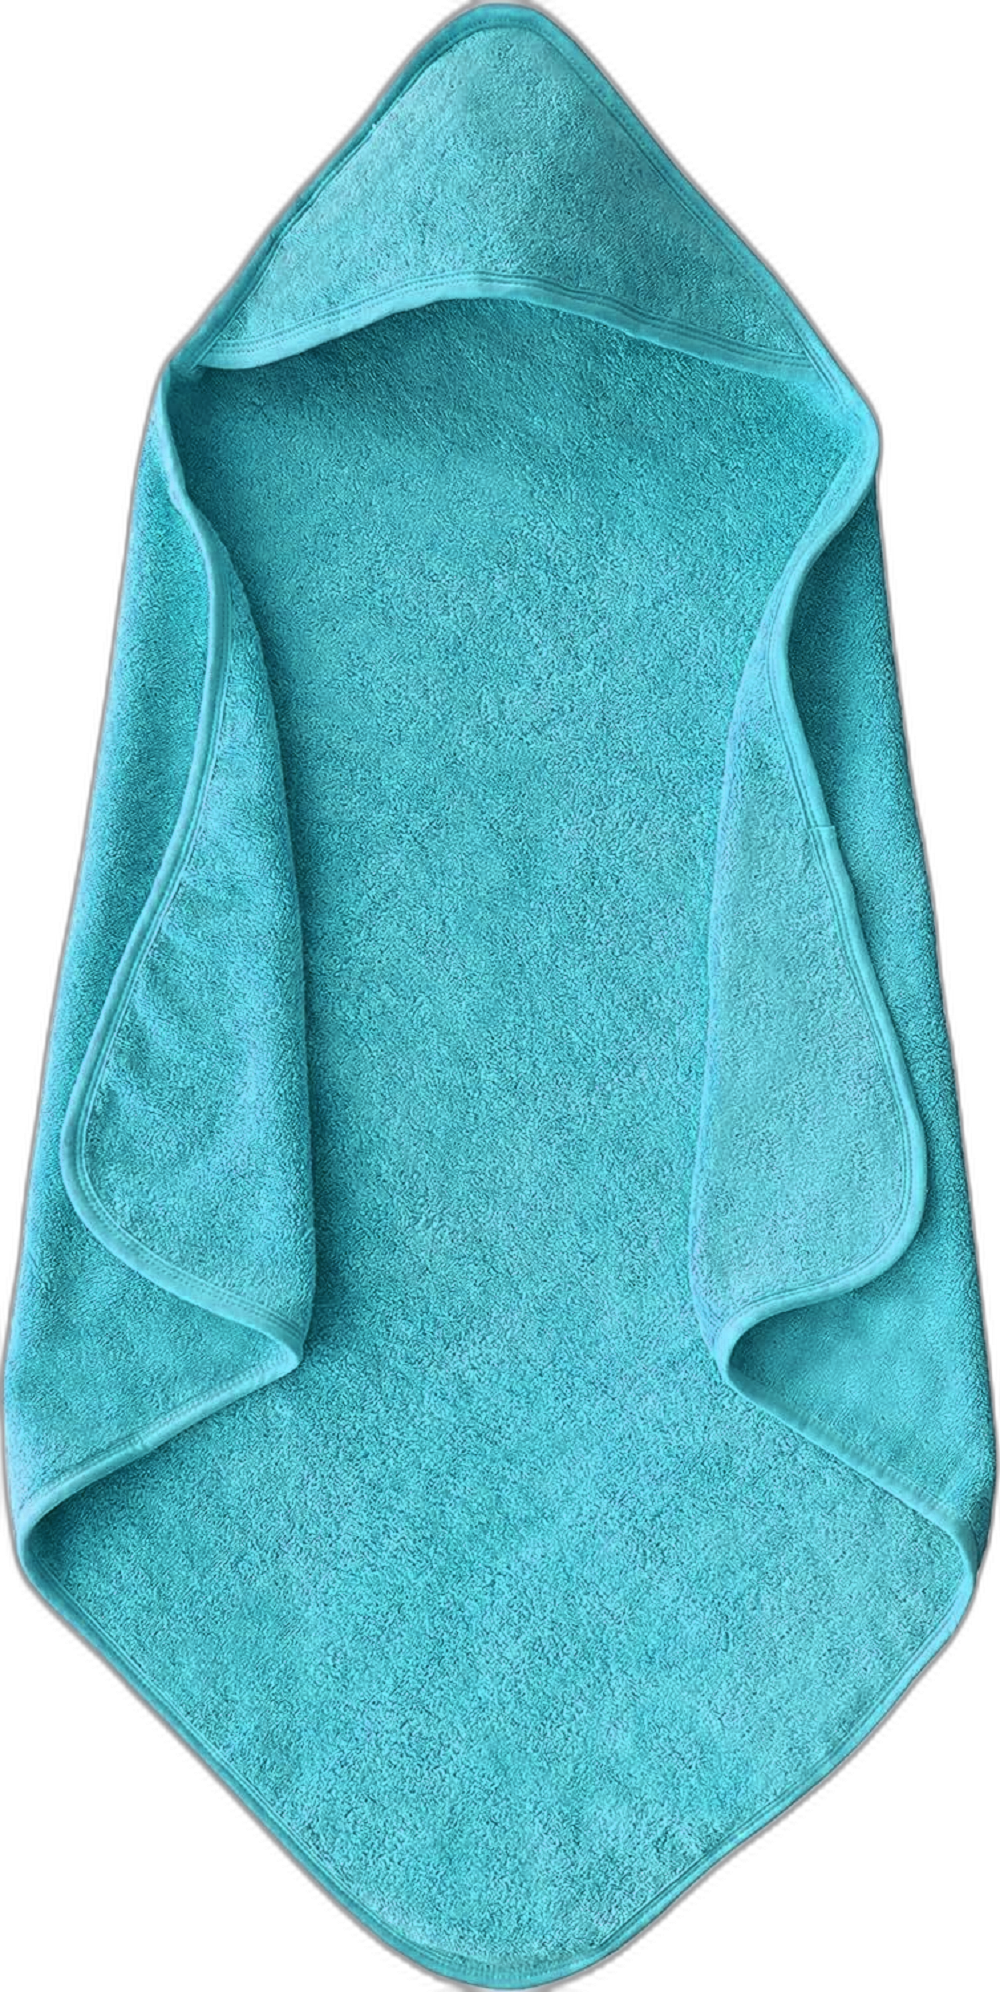 Toddler Baby Hooded Towel 100% Cotton Soft Newborn Kids Bathrobe Baby Towel Wrap